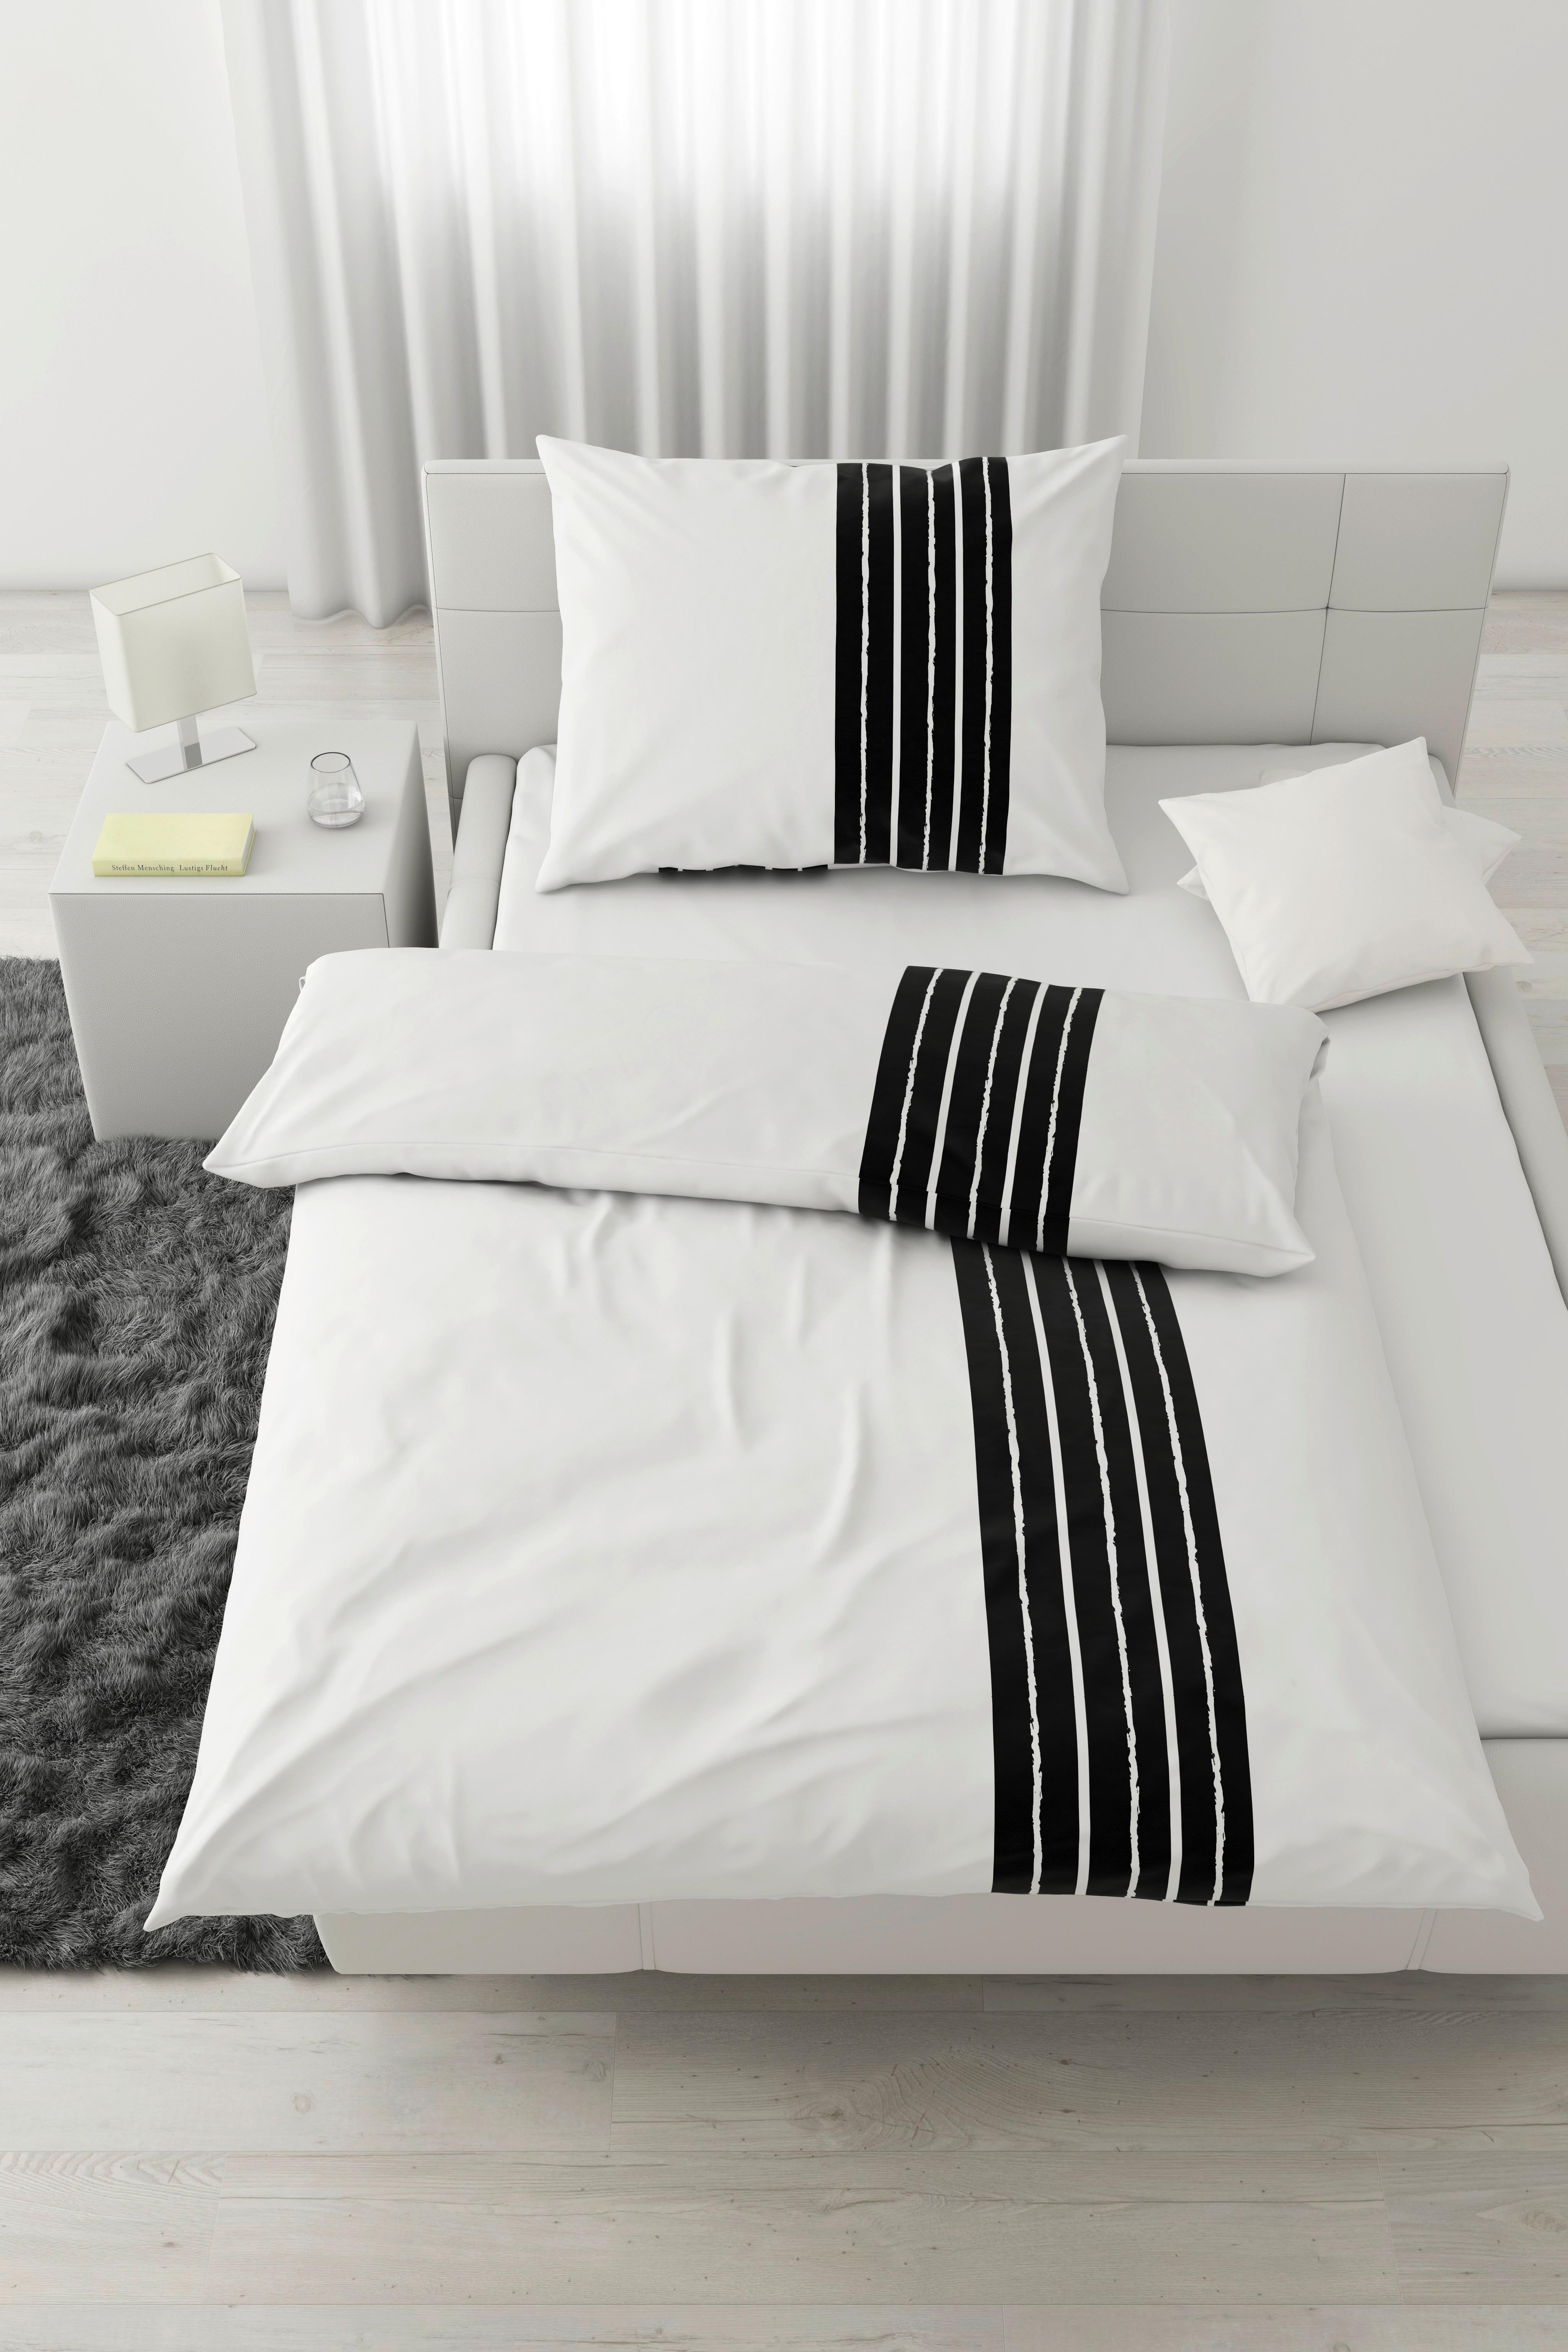 Bettwäsche Stripes in Weiss/Schwarz ca. 160x210cm - Weiss, Modern, Textil (160/210cm) - Modern Living